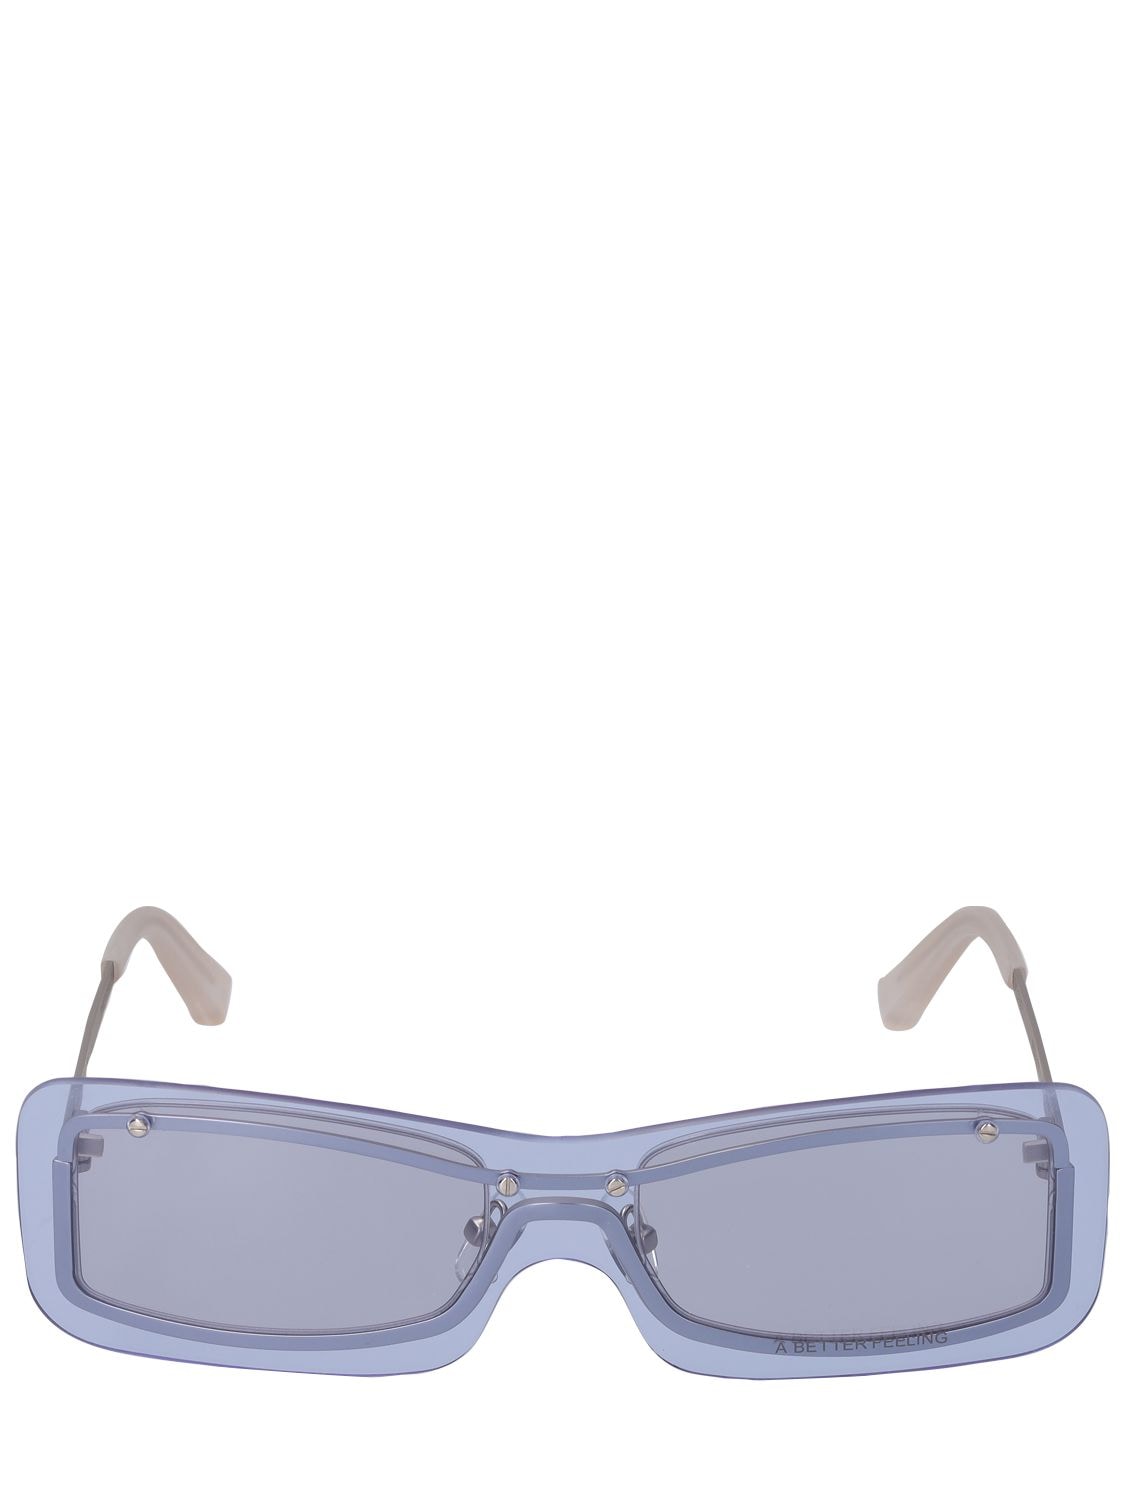 Image of Arctus Genesis Sunglasses